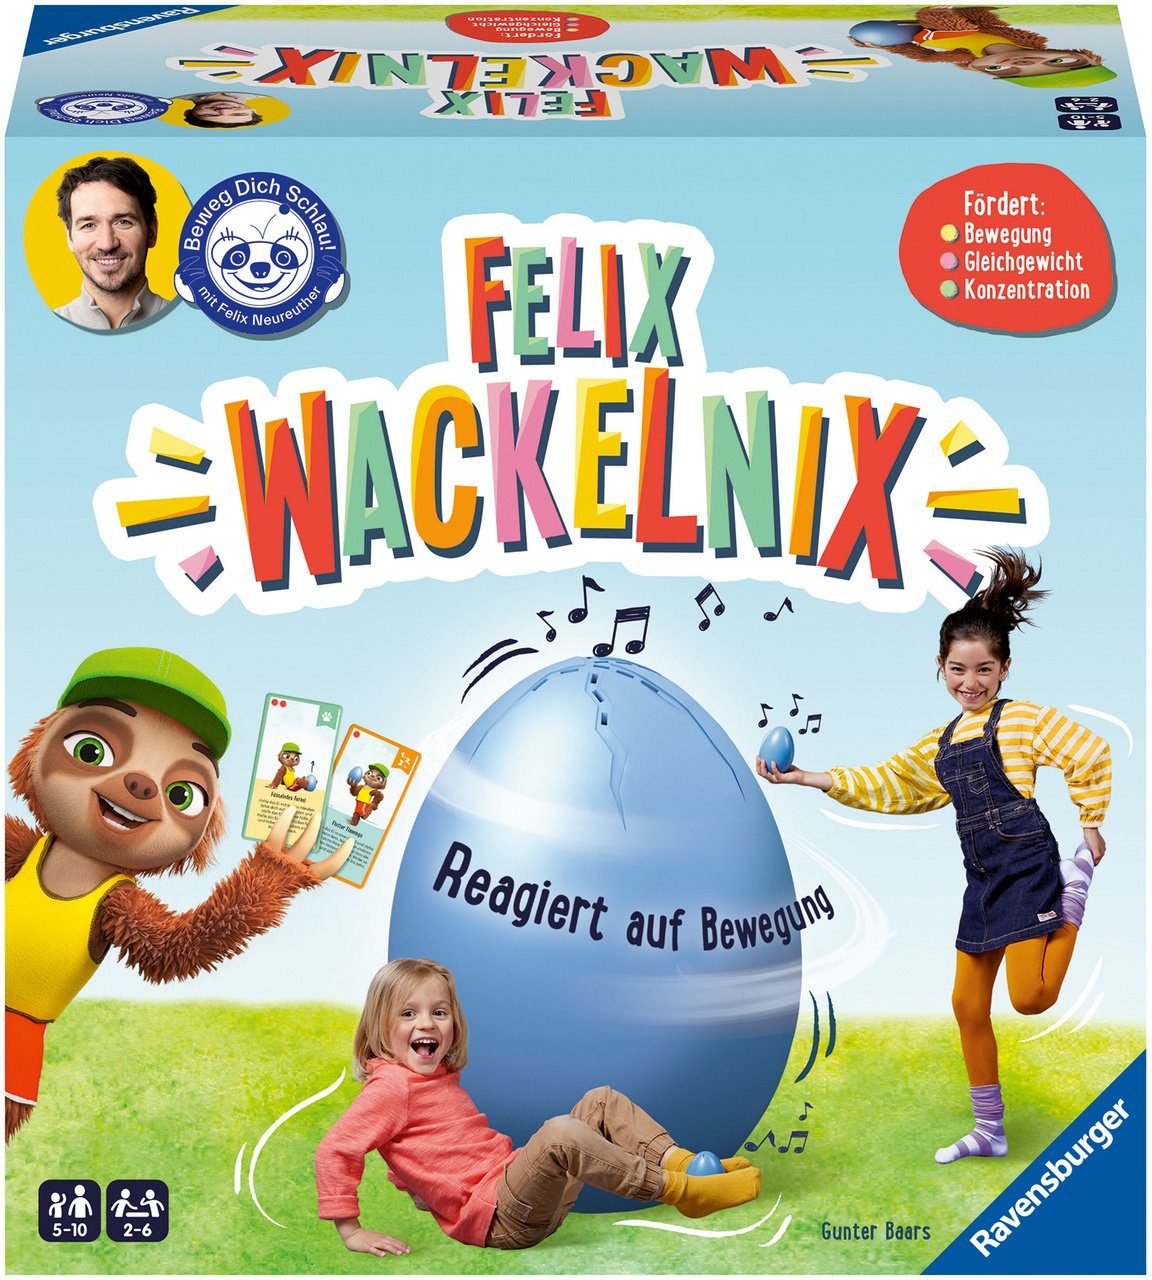 Ravensburger Spiel, Gemeinschaftsspiel Felix Wackelnix, Made in Europe, FSC® - schützt Wald - weltweit